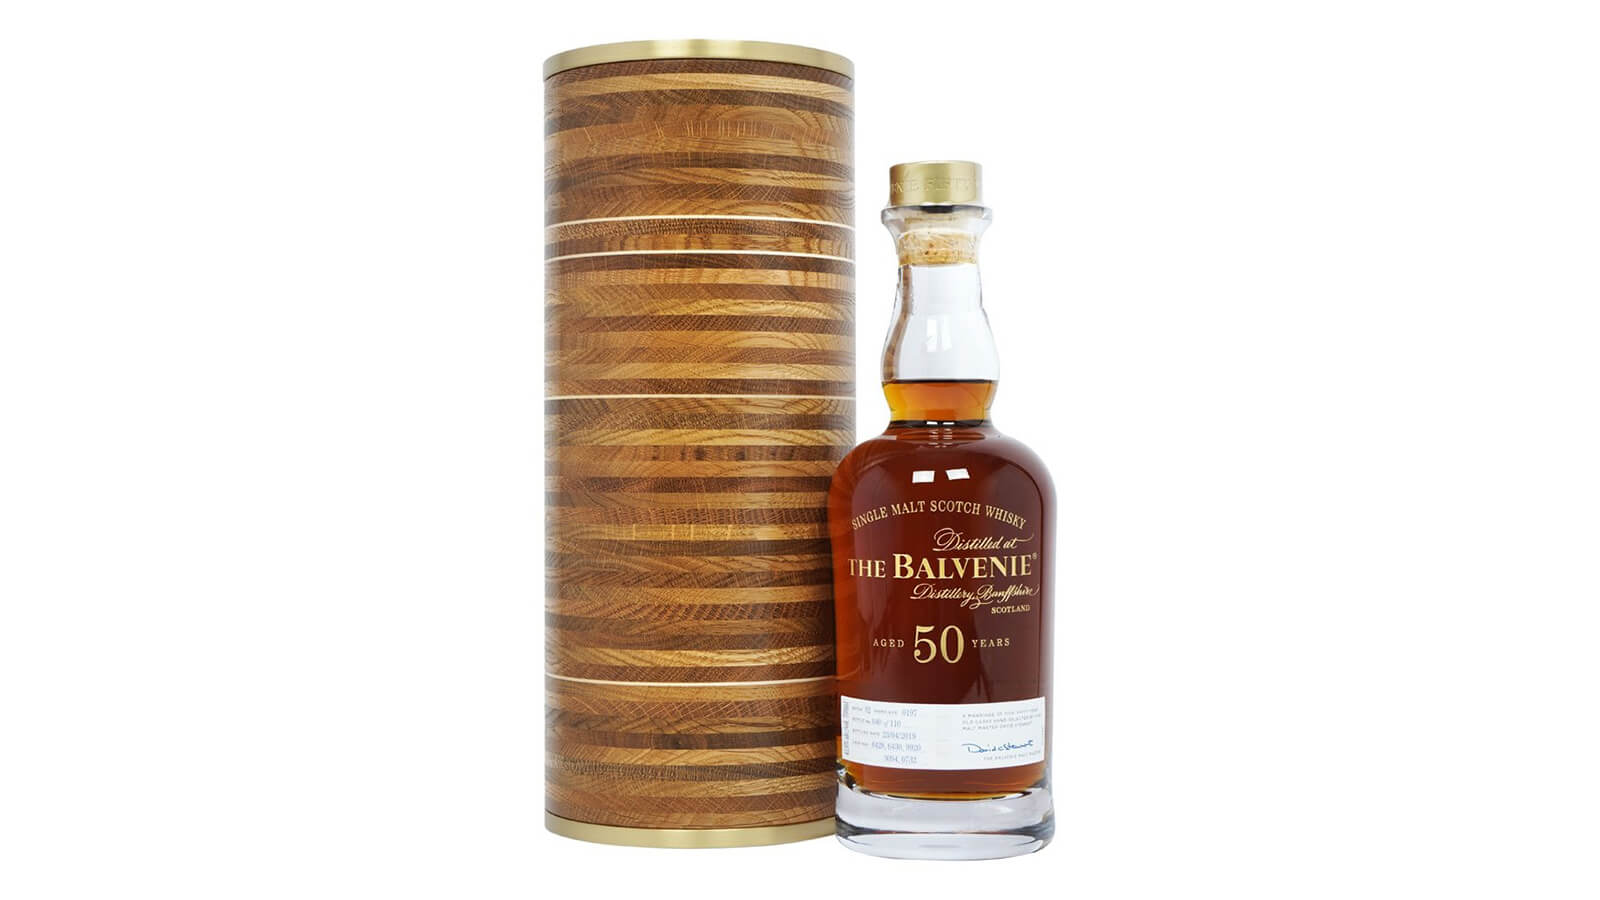 The Balvenie 50 Years Old